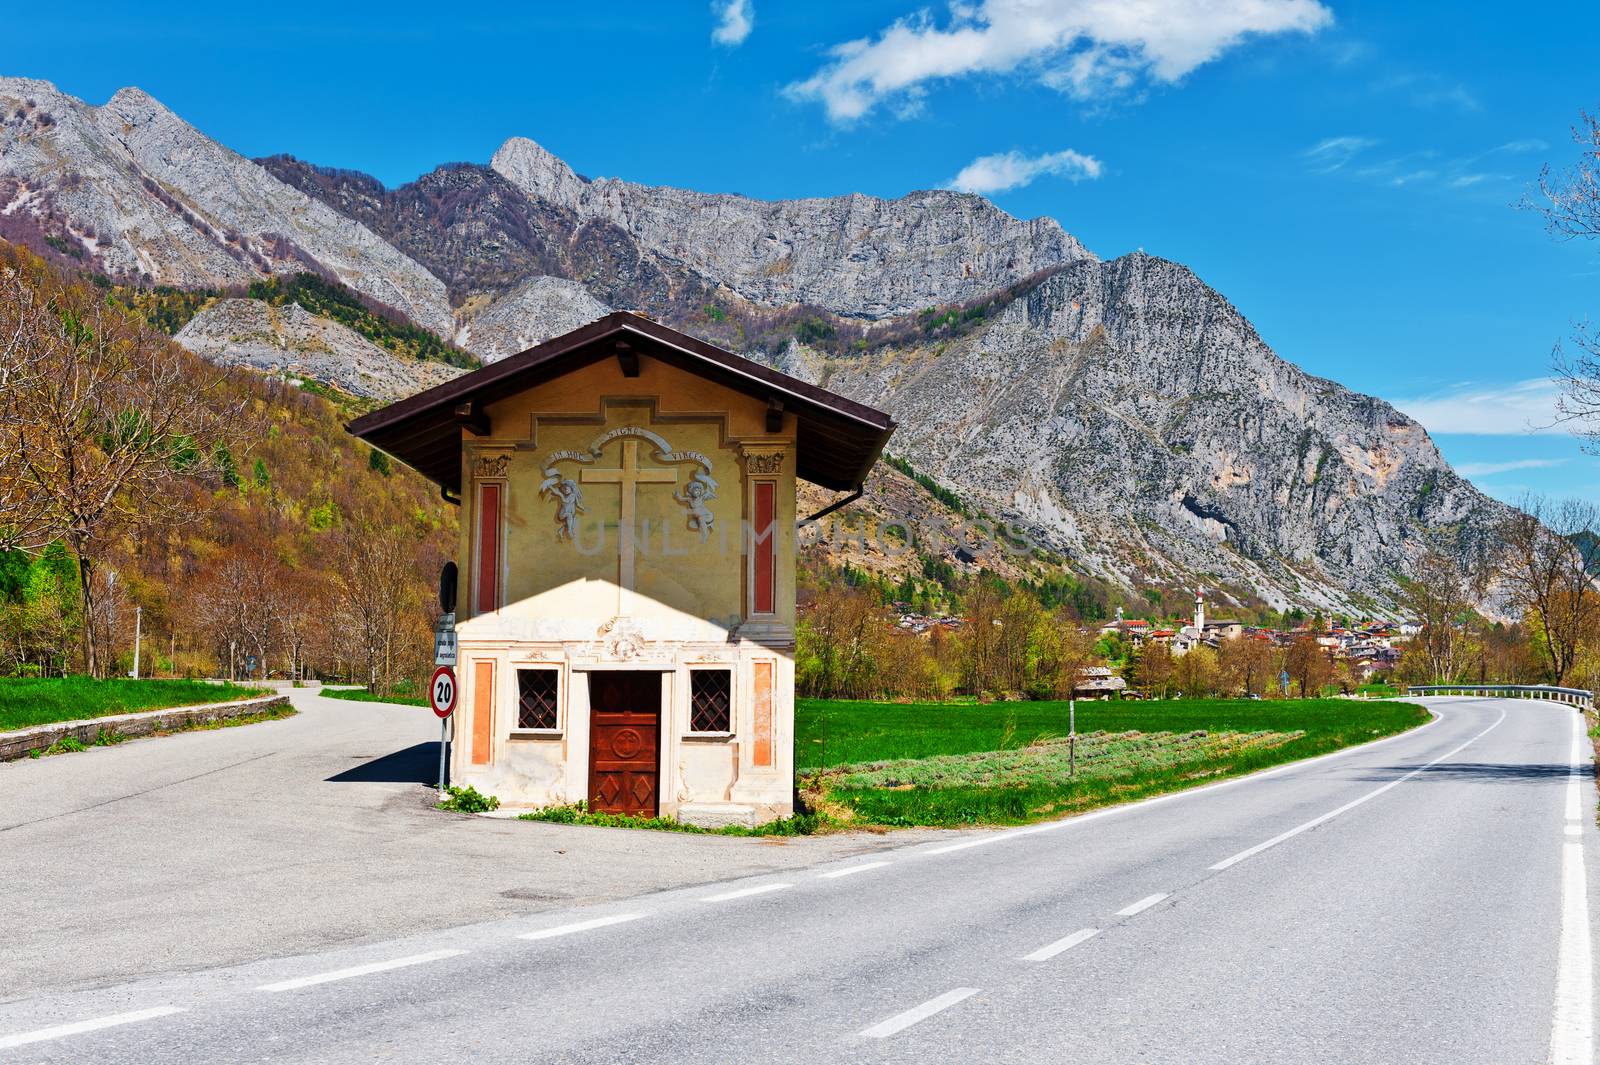 Little Church Near the Crossroads in the Italian Alps